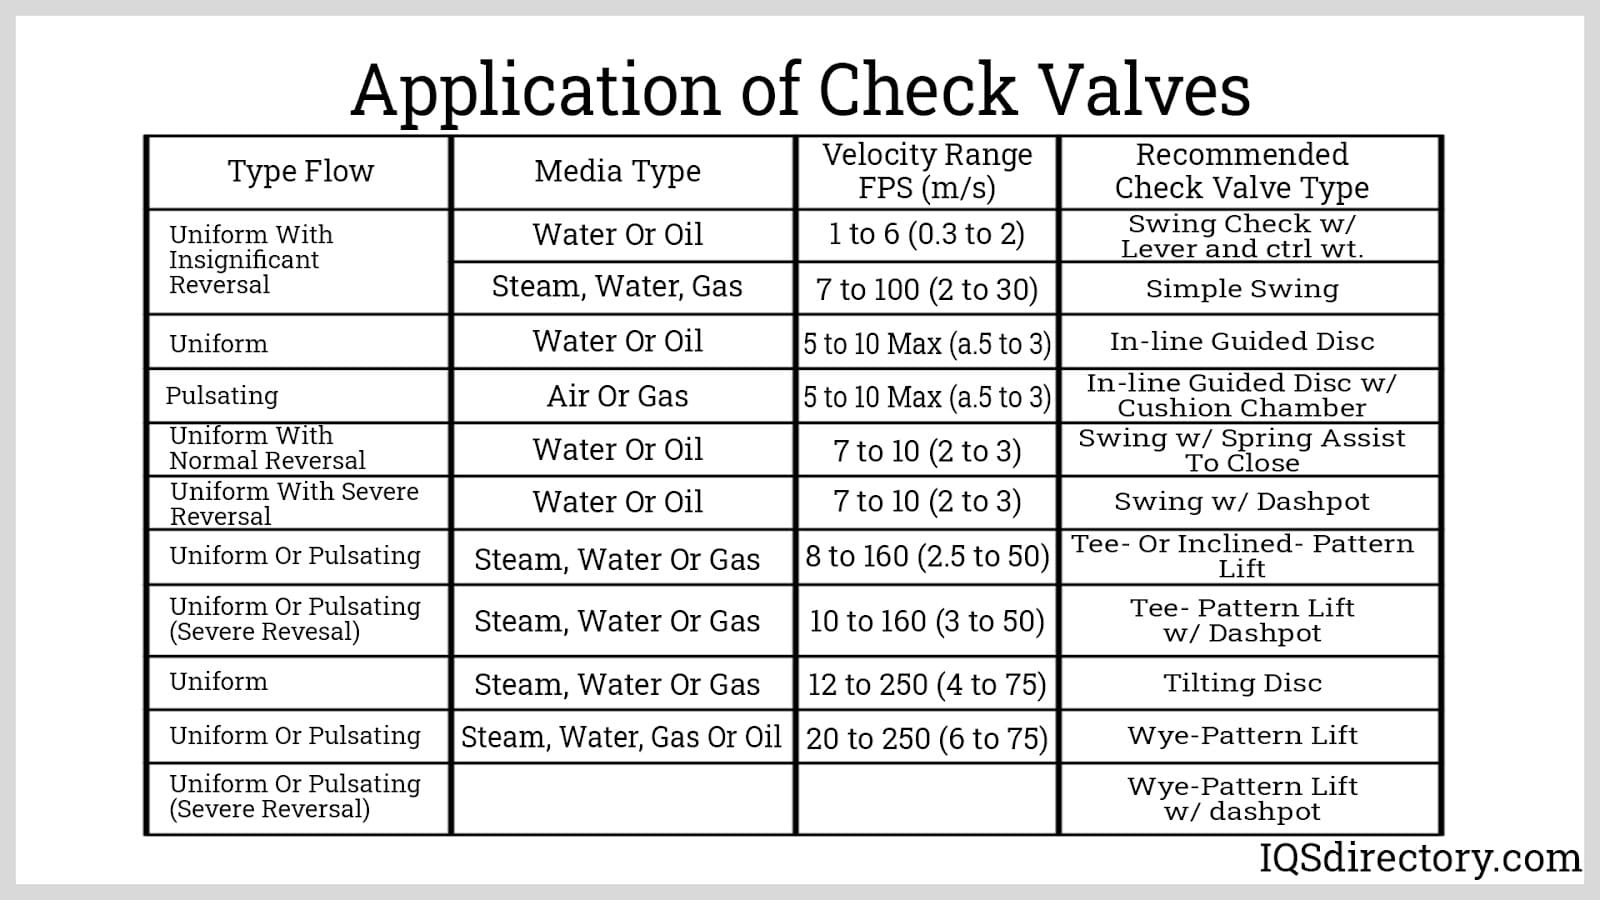 Application of Check Valves